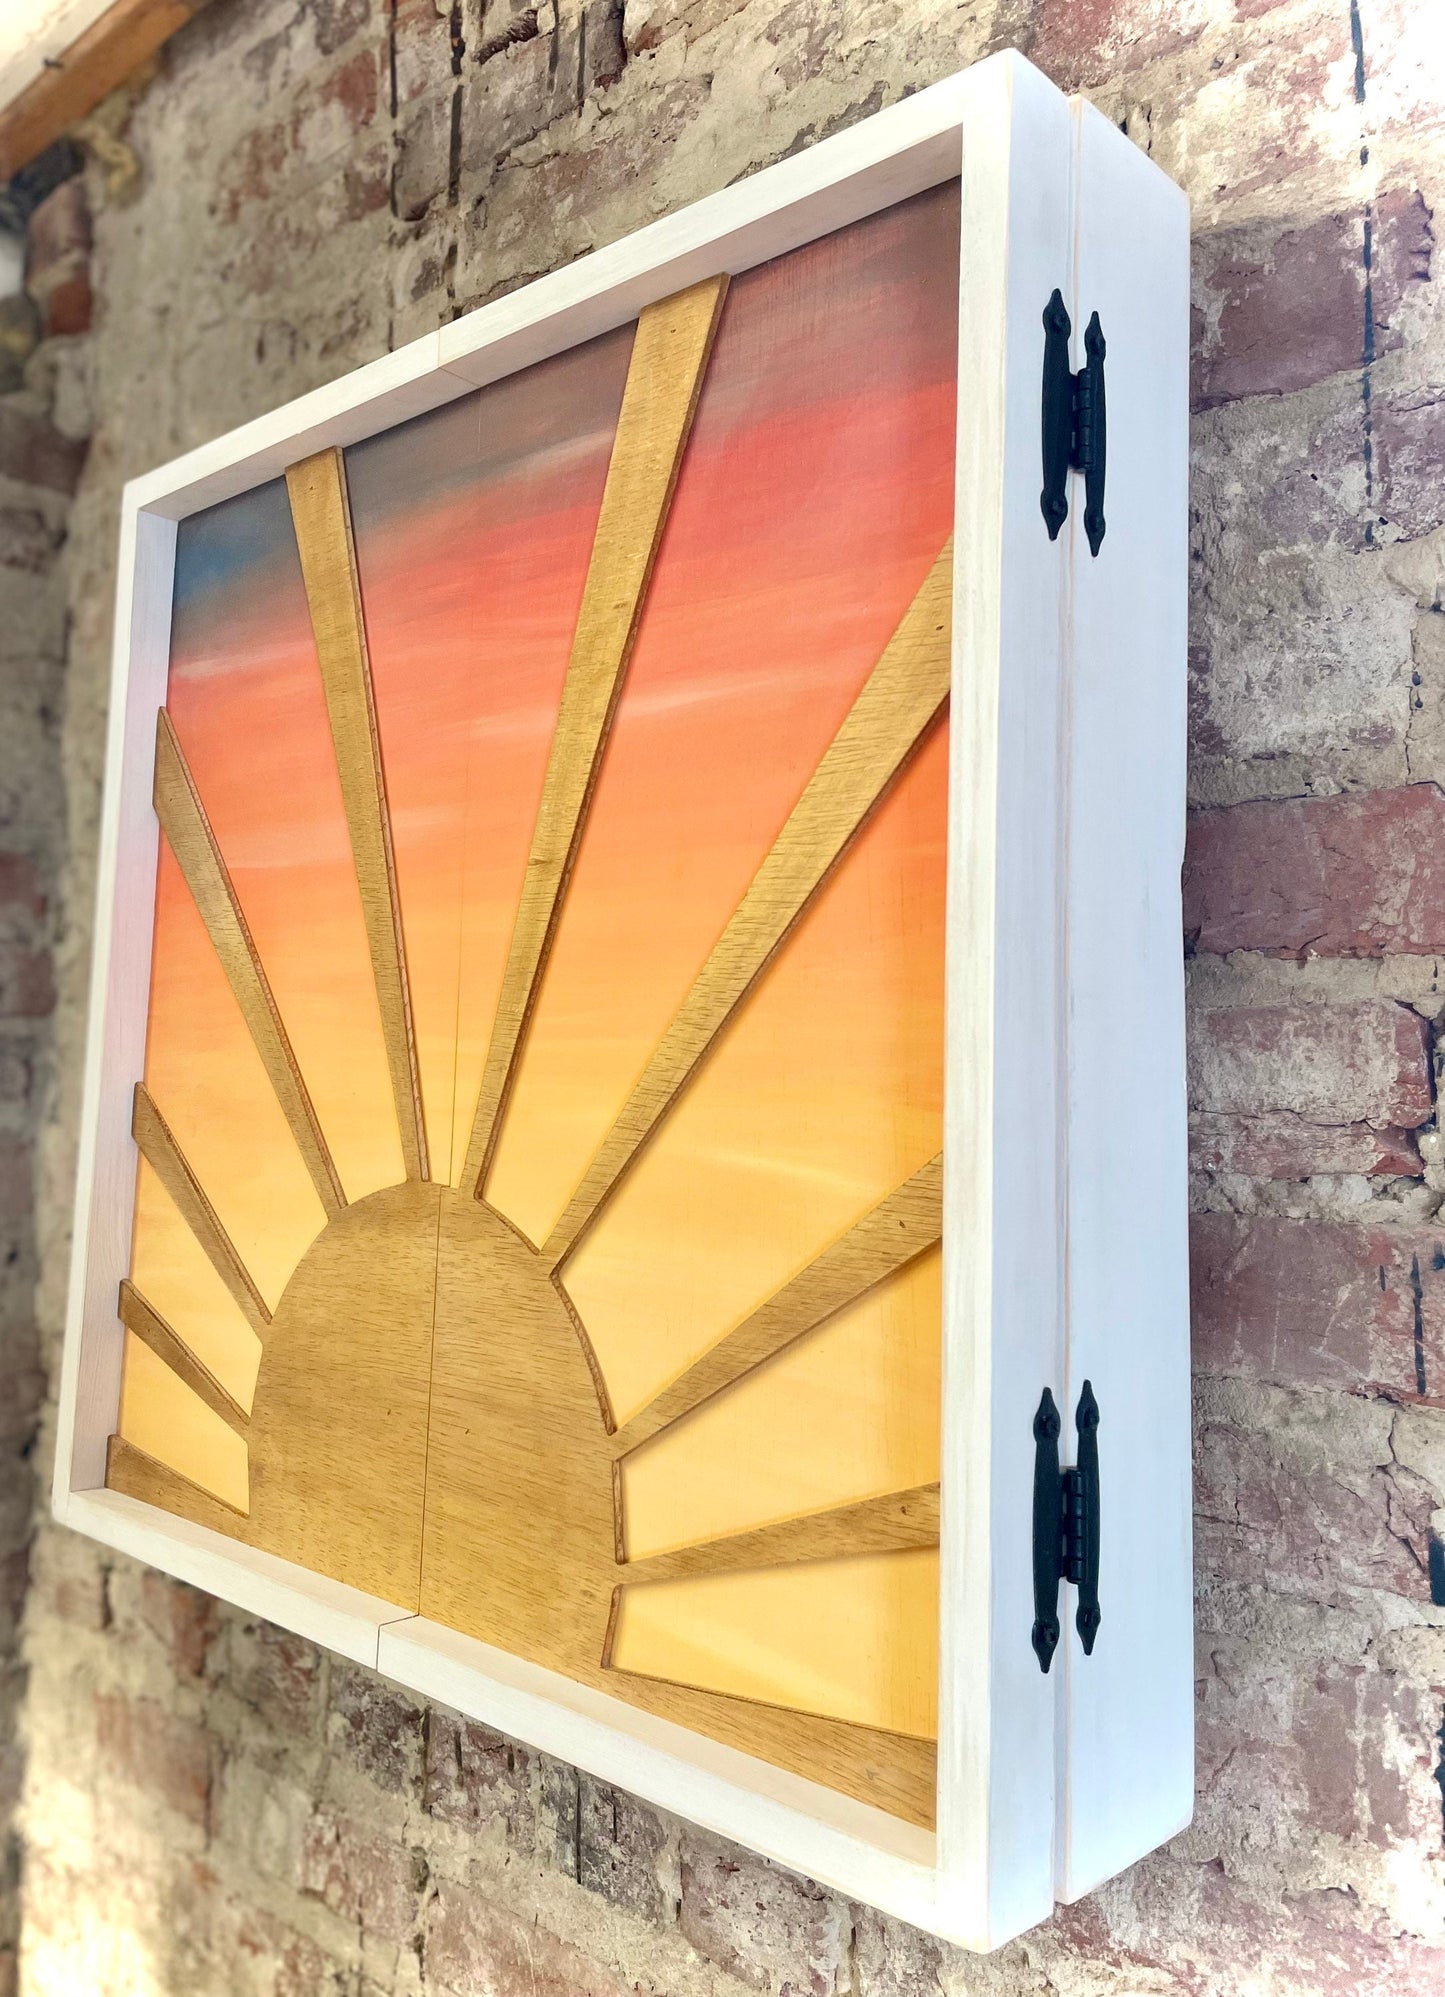 Rustic Dartboard Cabinet - Rustic Sun Art  24”x24” - Sun Artwork - Rustic Cabinet - Game Room / Man Cave Art - Wall Decor - Cabinet